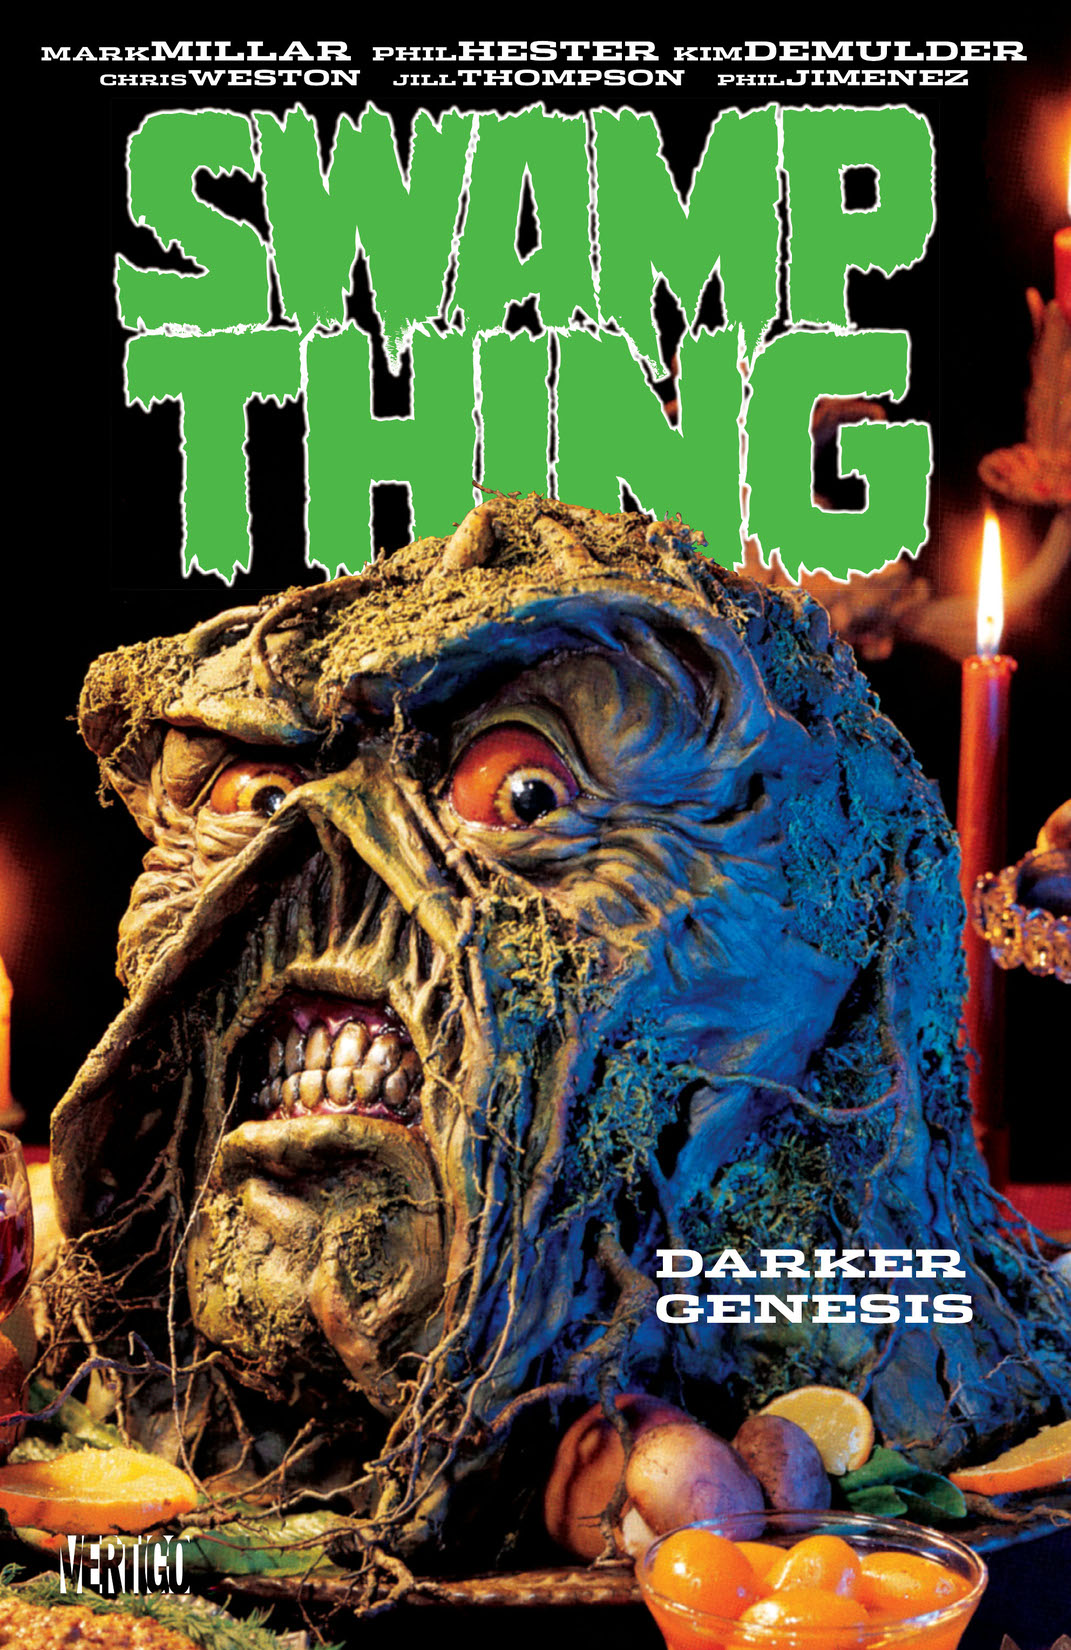 Swamp Thing: Darker Genesis preview images